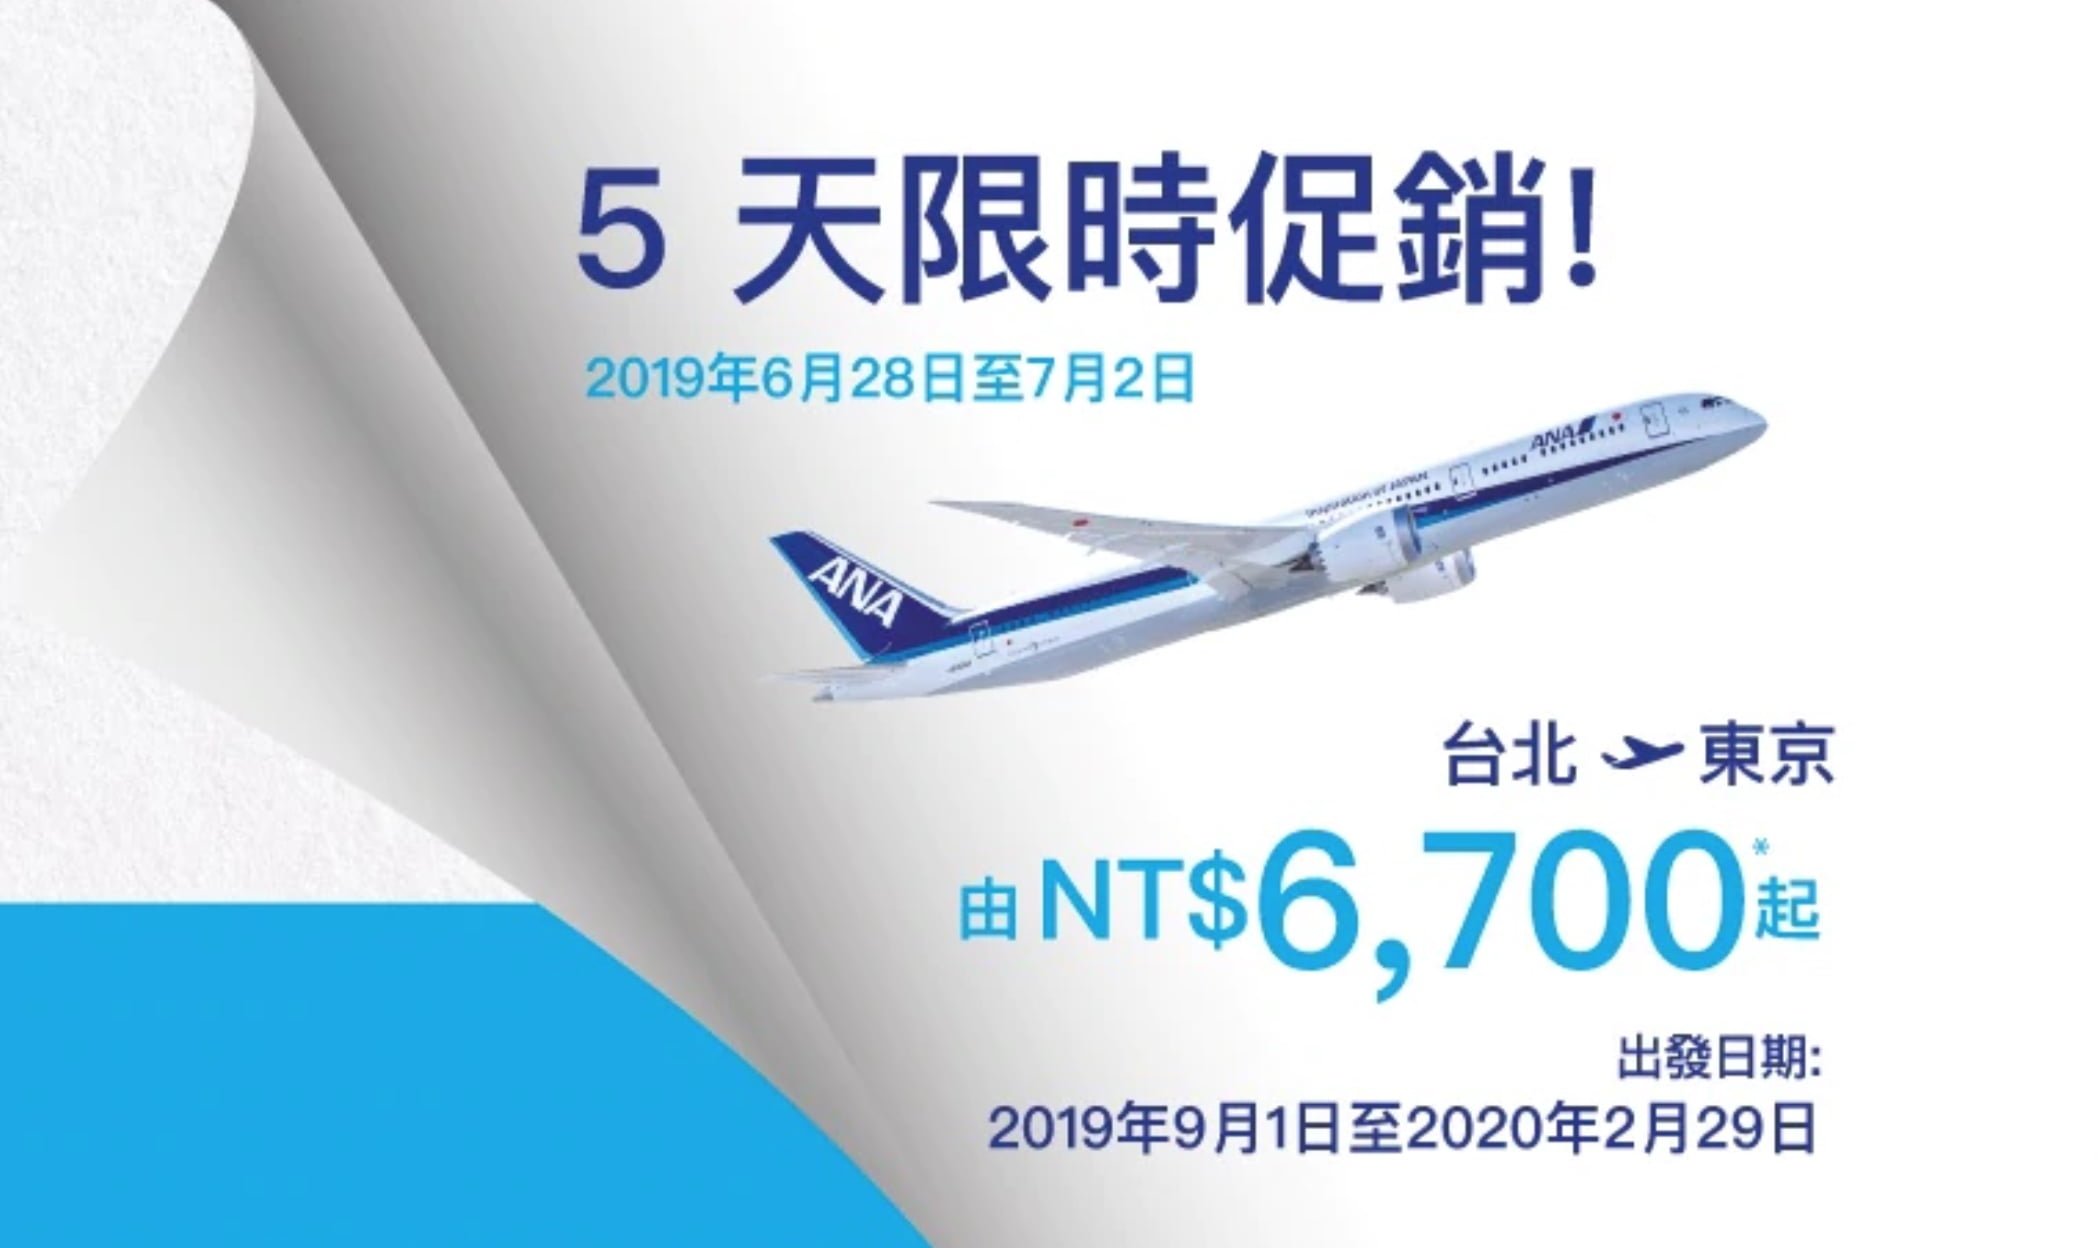 ANA 全日空 6、7 雙月5日限時促銷飛日本、東京 6700 元起 ANA Japan Tolyo Travel Promotion July June 2019